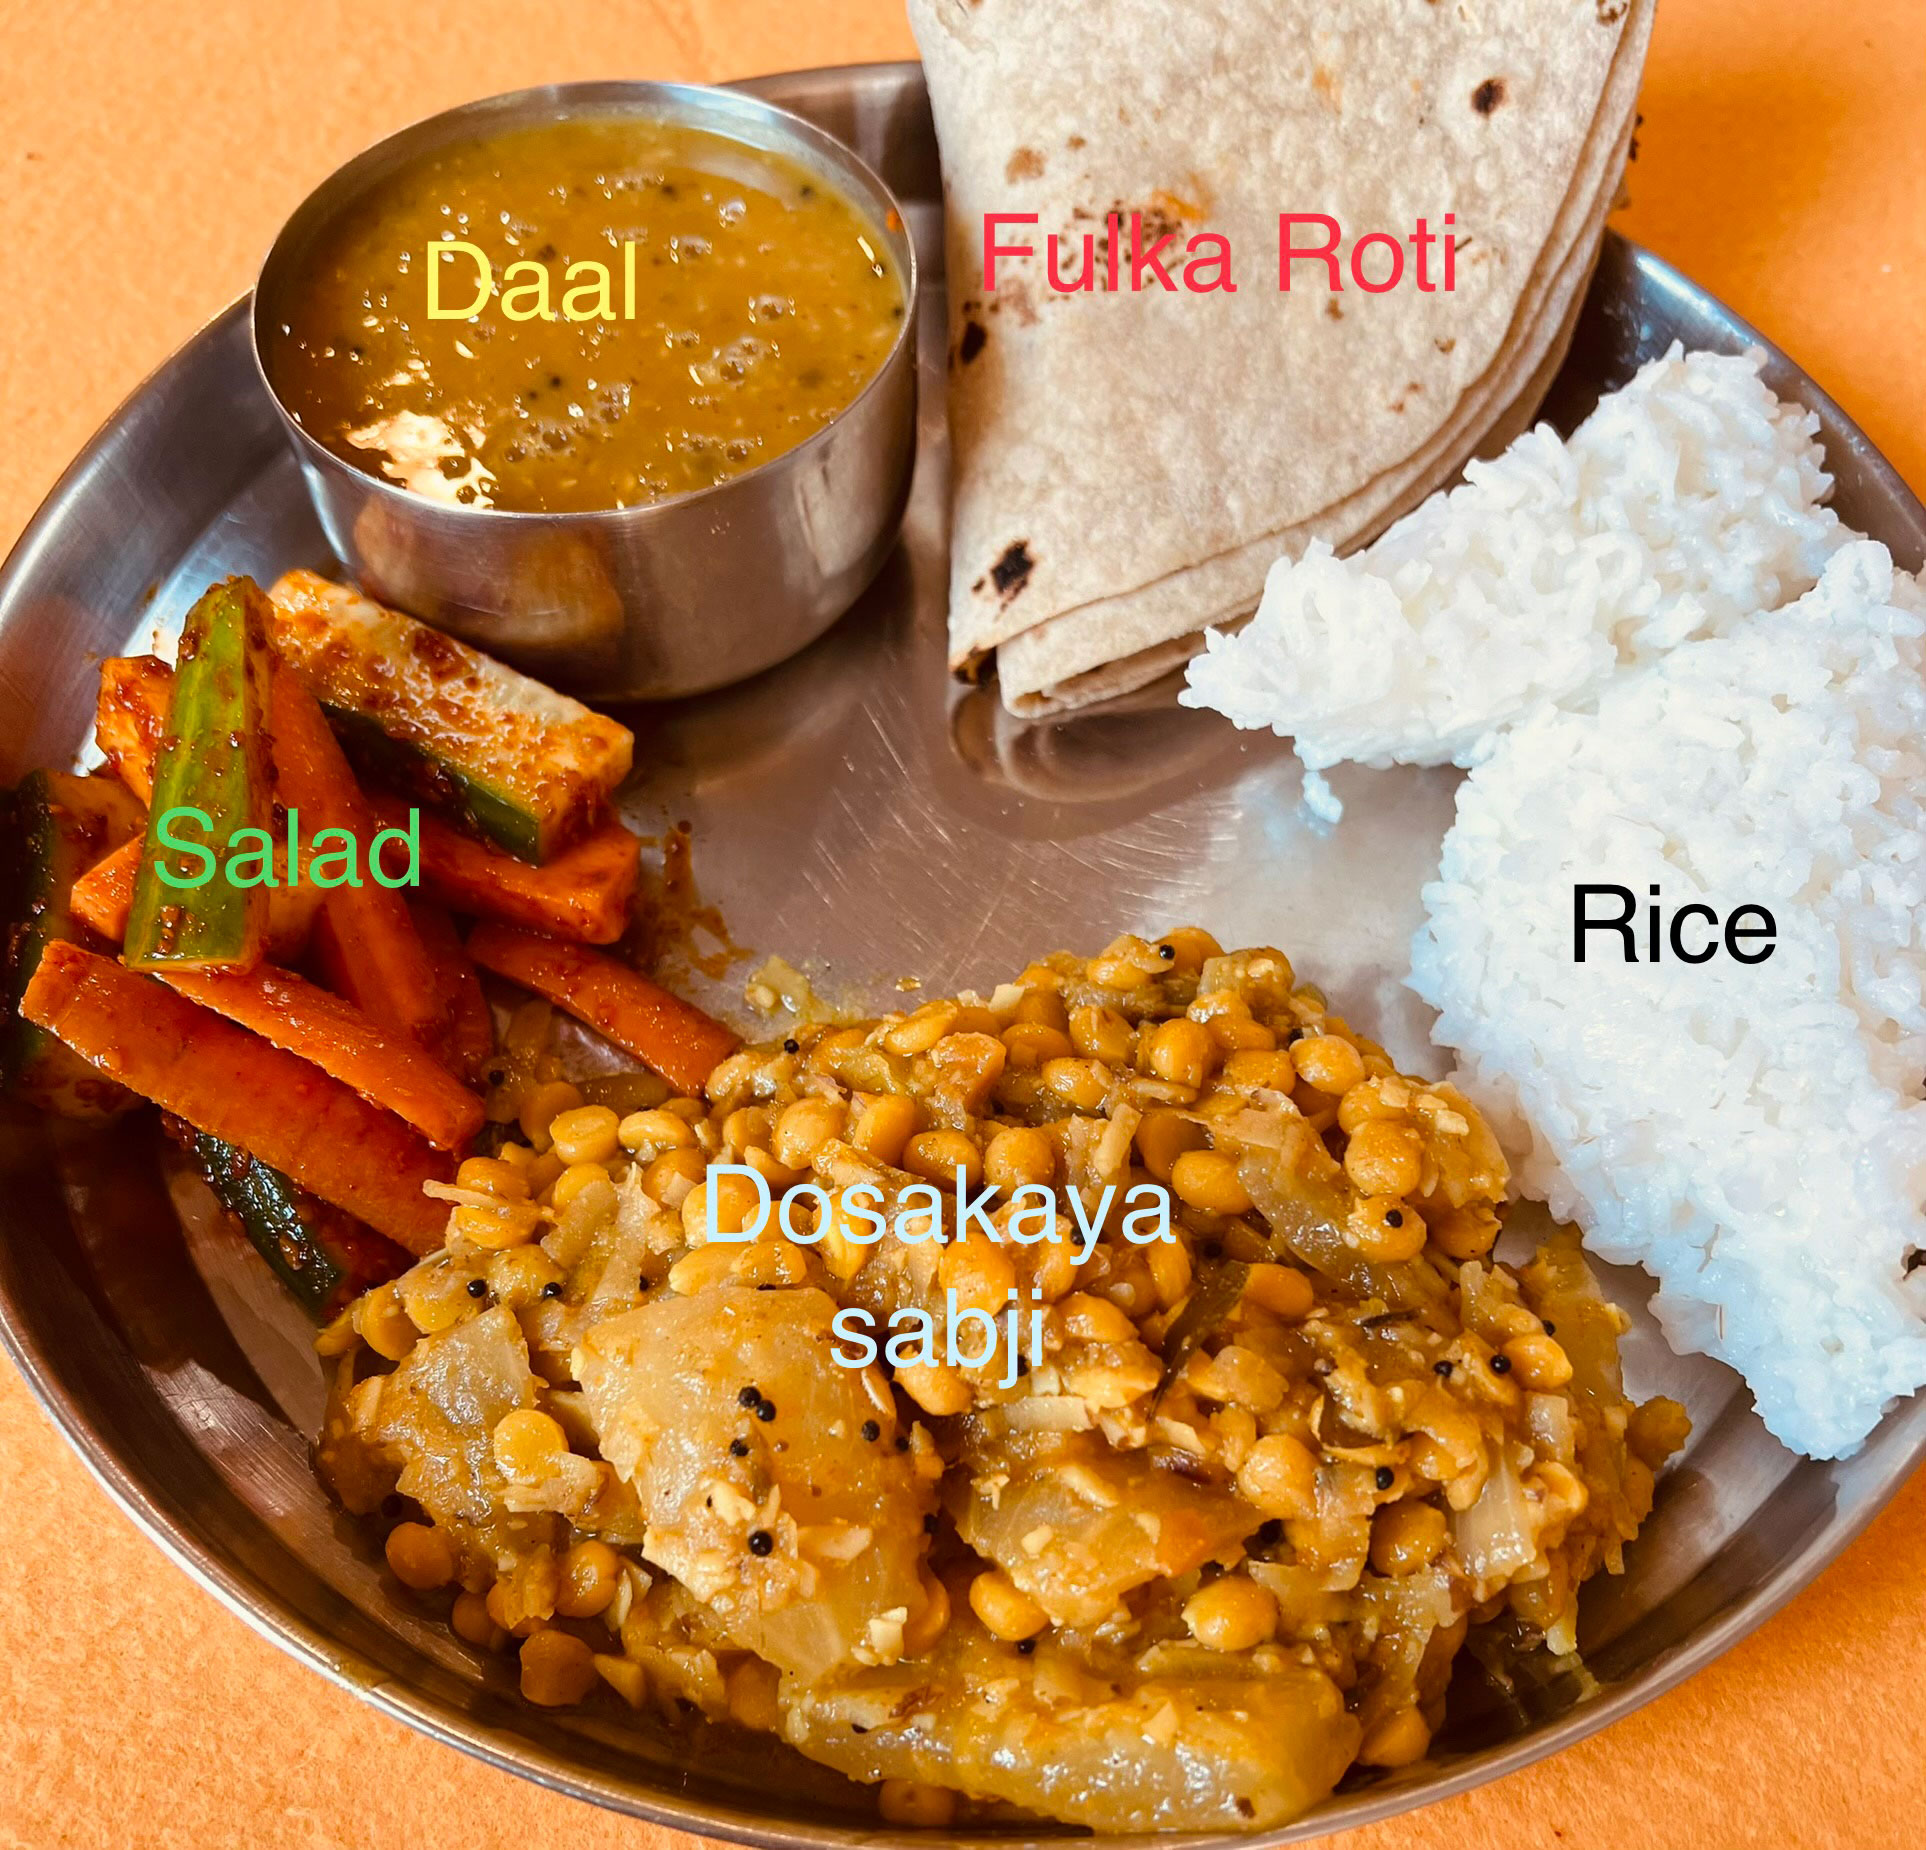 Dosakaya Sabji - rice - Daal - salad - fulka roti